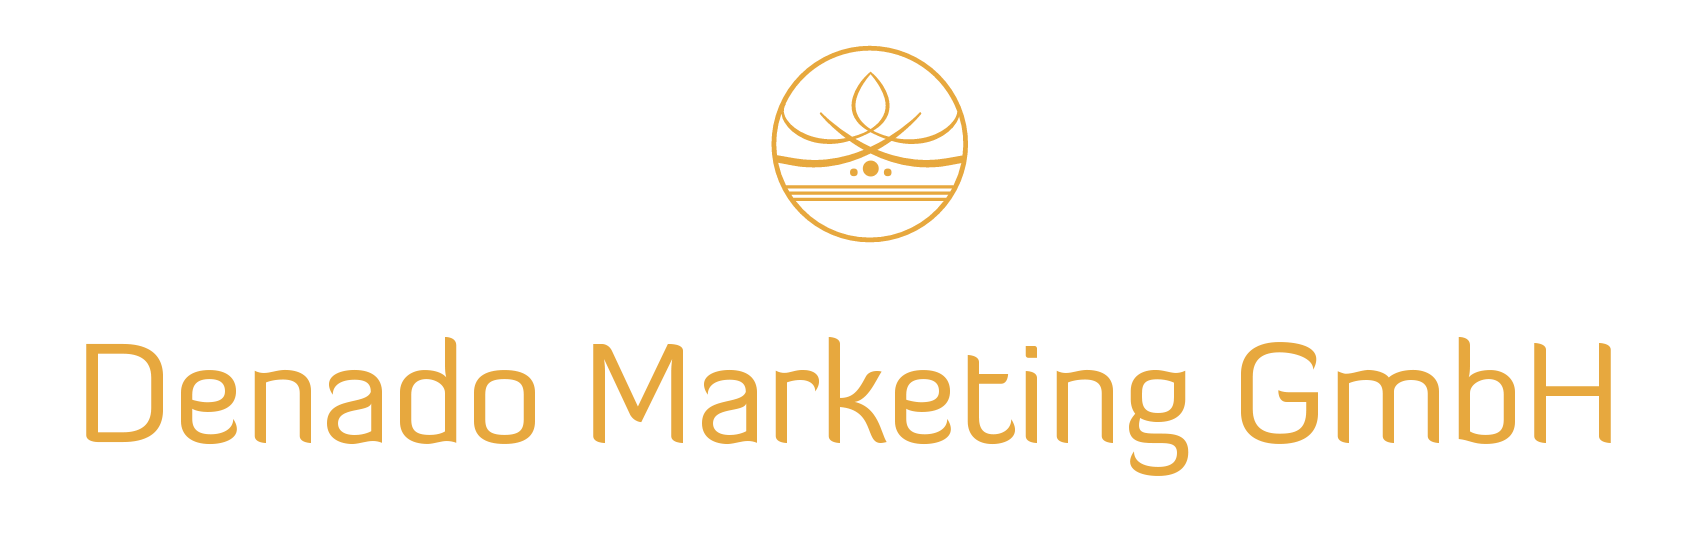 Denado Marketing GmbH